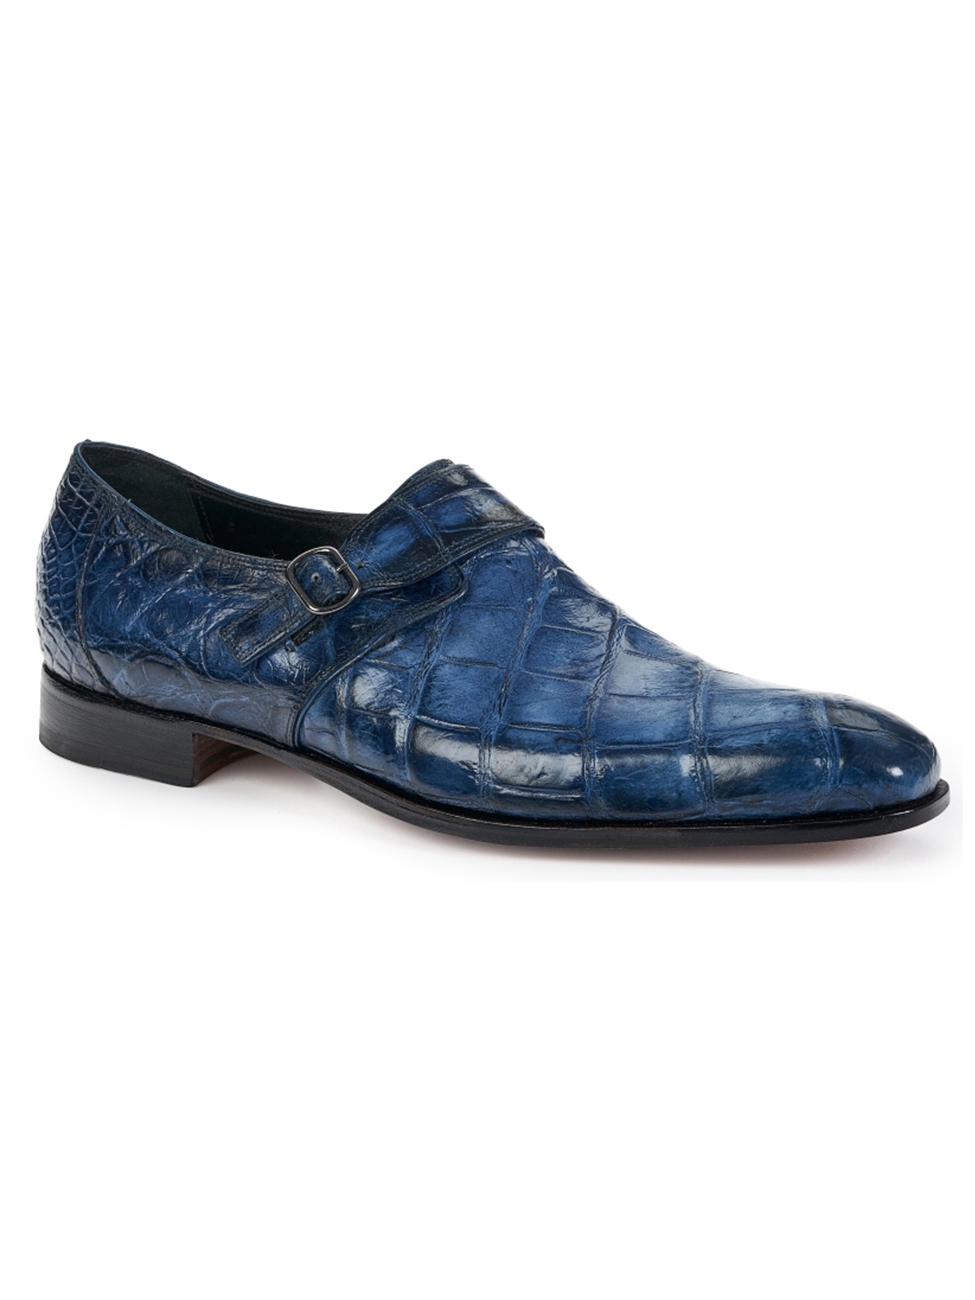 Caribbean Blue Alligator Monk Strap Men's Shoe | Mauri Monk Strap Shoes ...